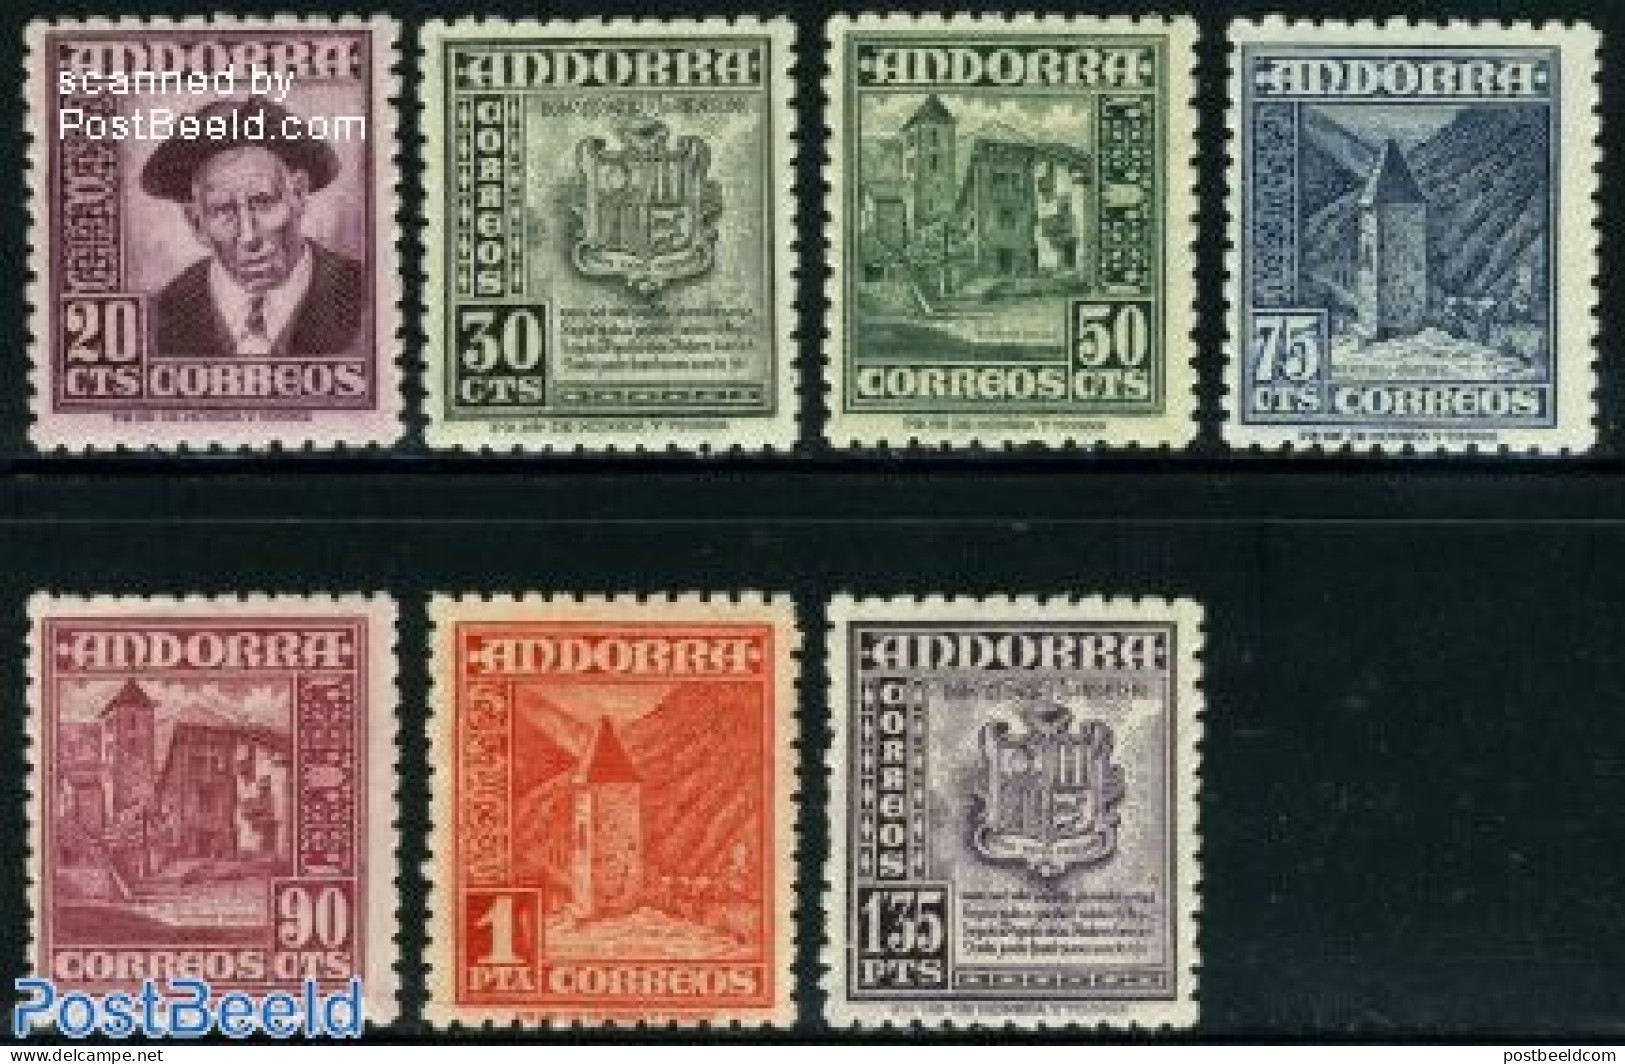 Andorra, Spanish Post 1948 Definitives, National Symbols 7v, Unused (hinged), History - Religion - Coat Of Arms - Chur.. - Nuevos